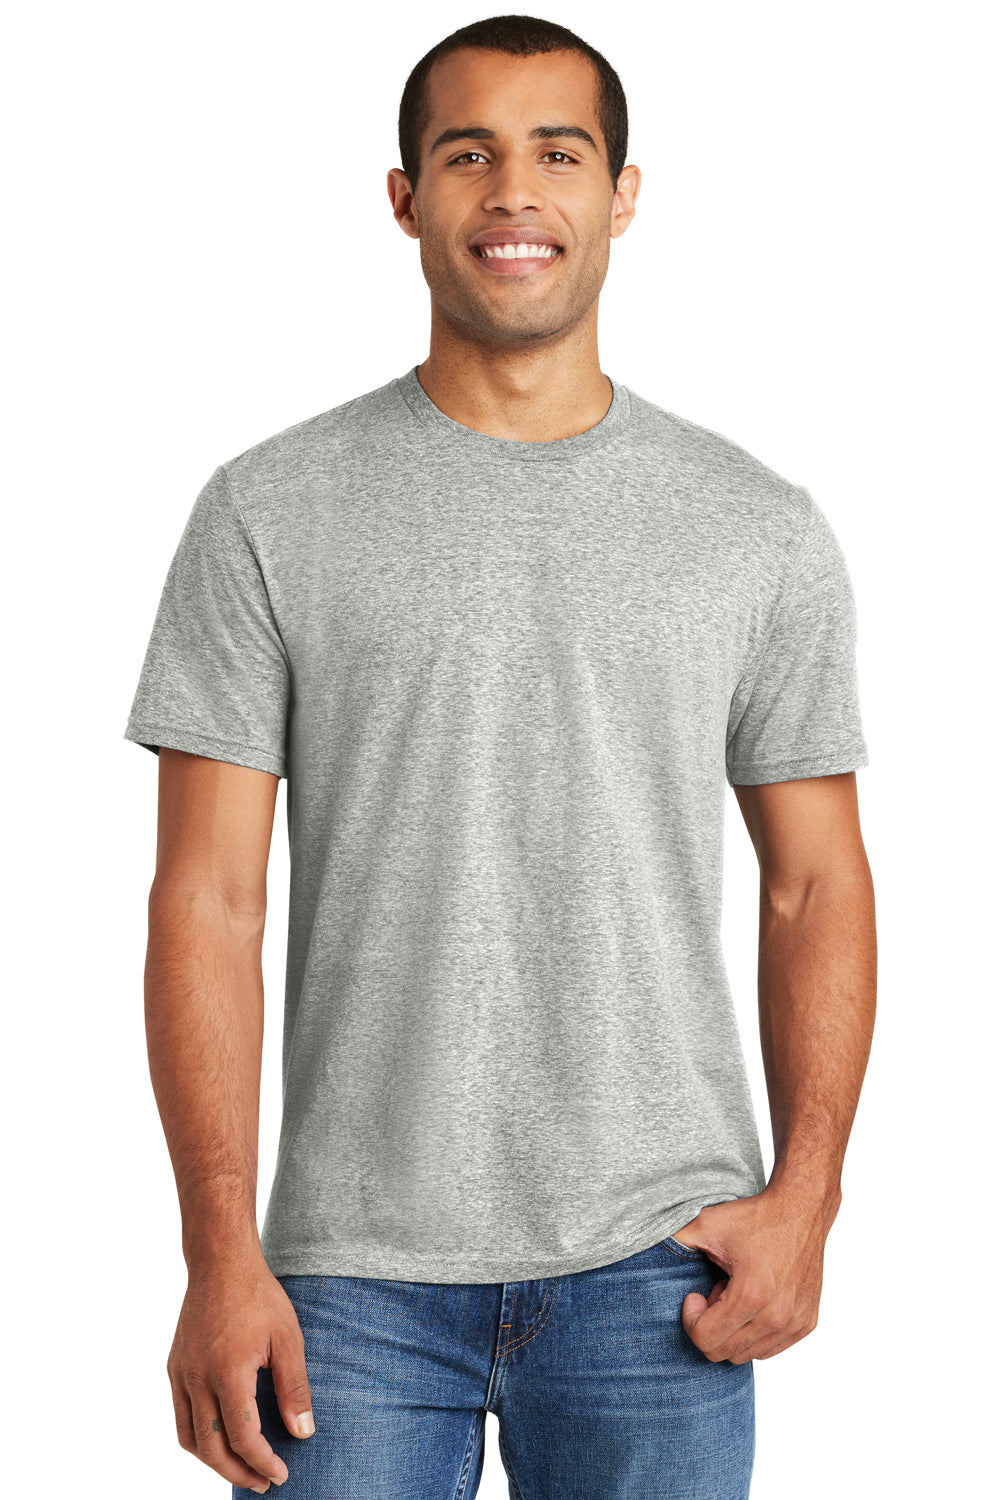 District DT365A Mens Astro Short Sleeve Crewneck T-Shirt Grey Front